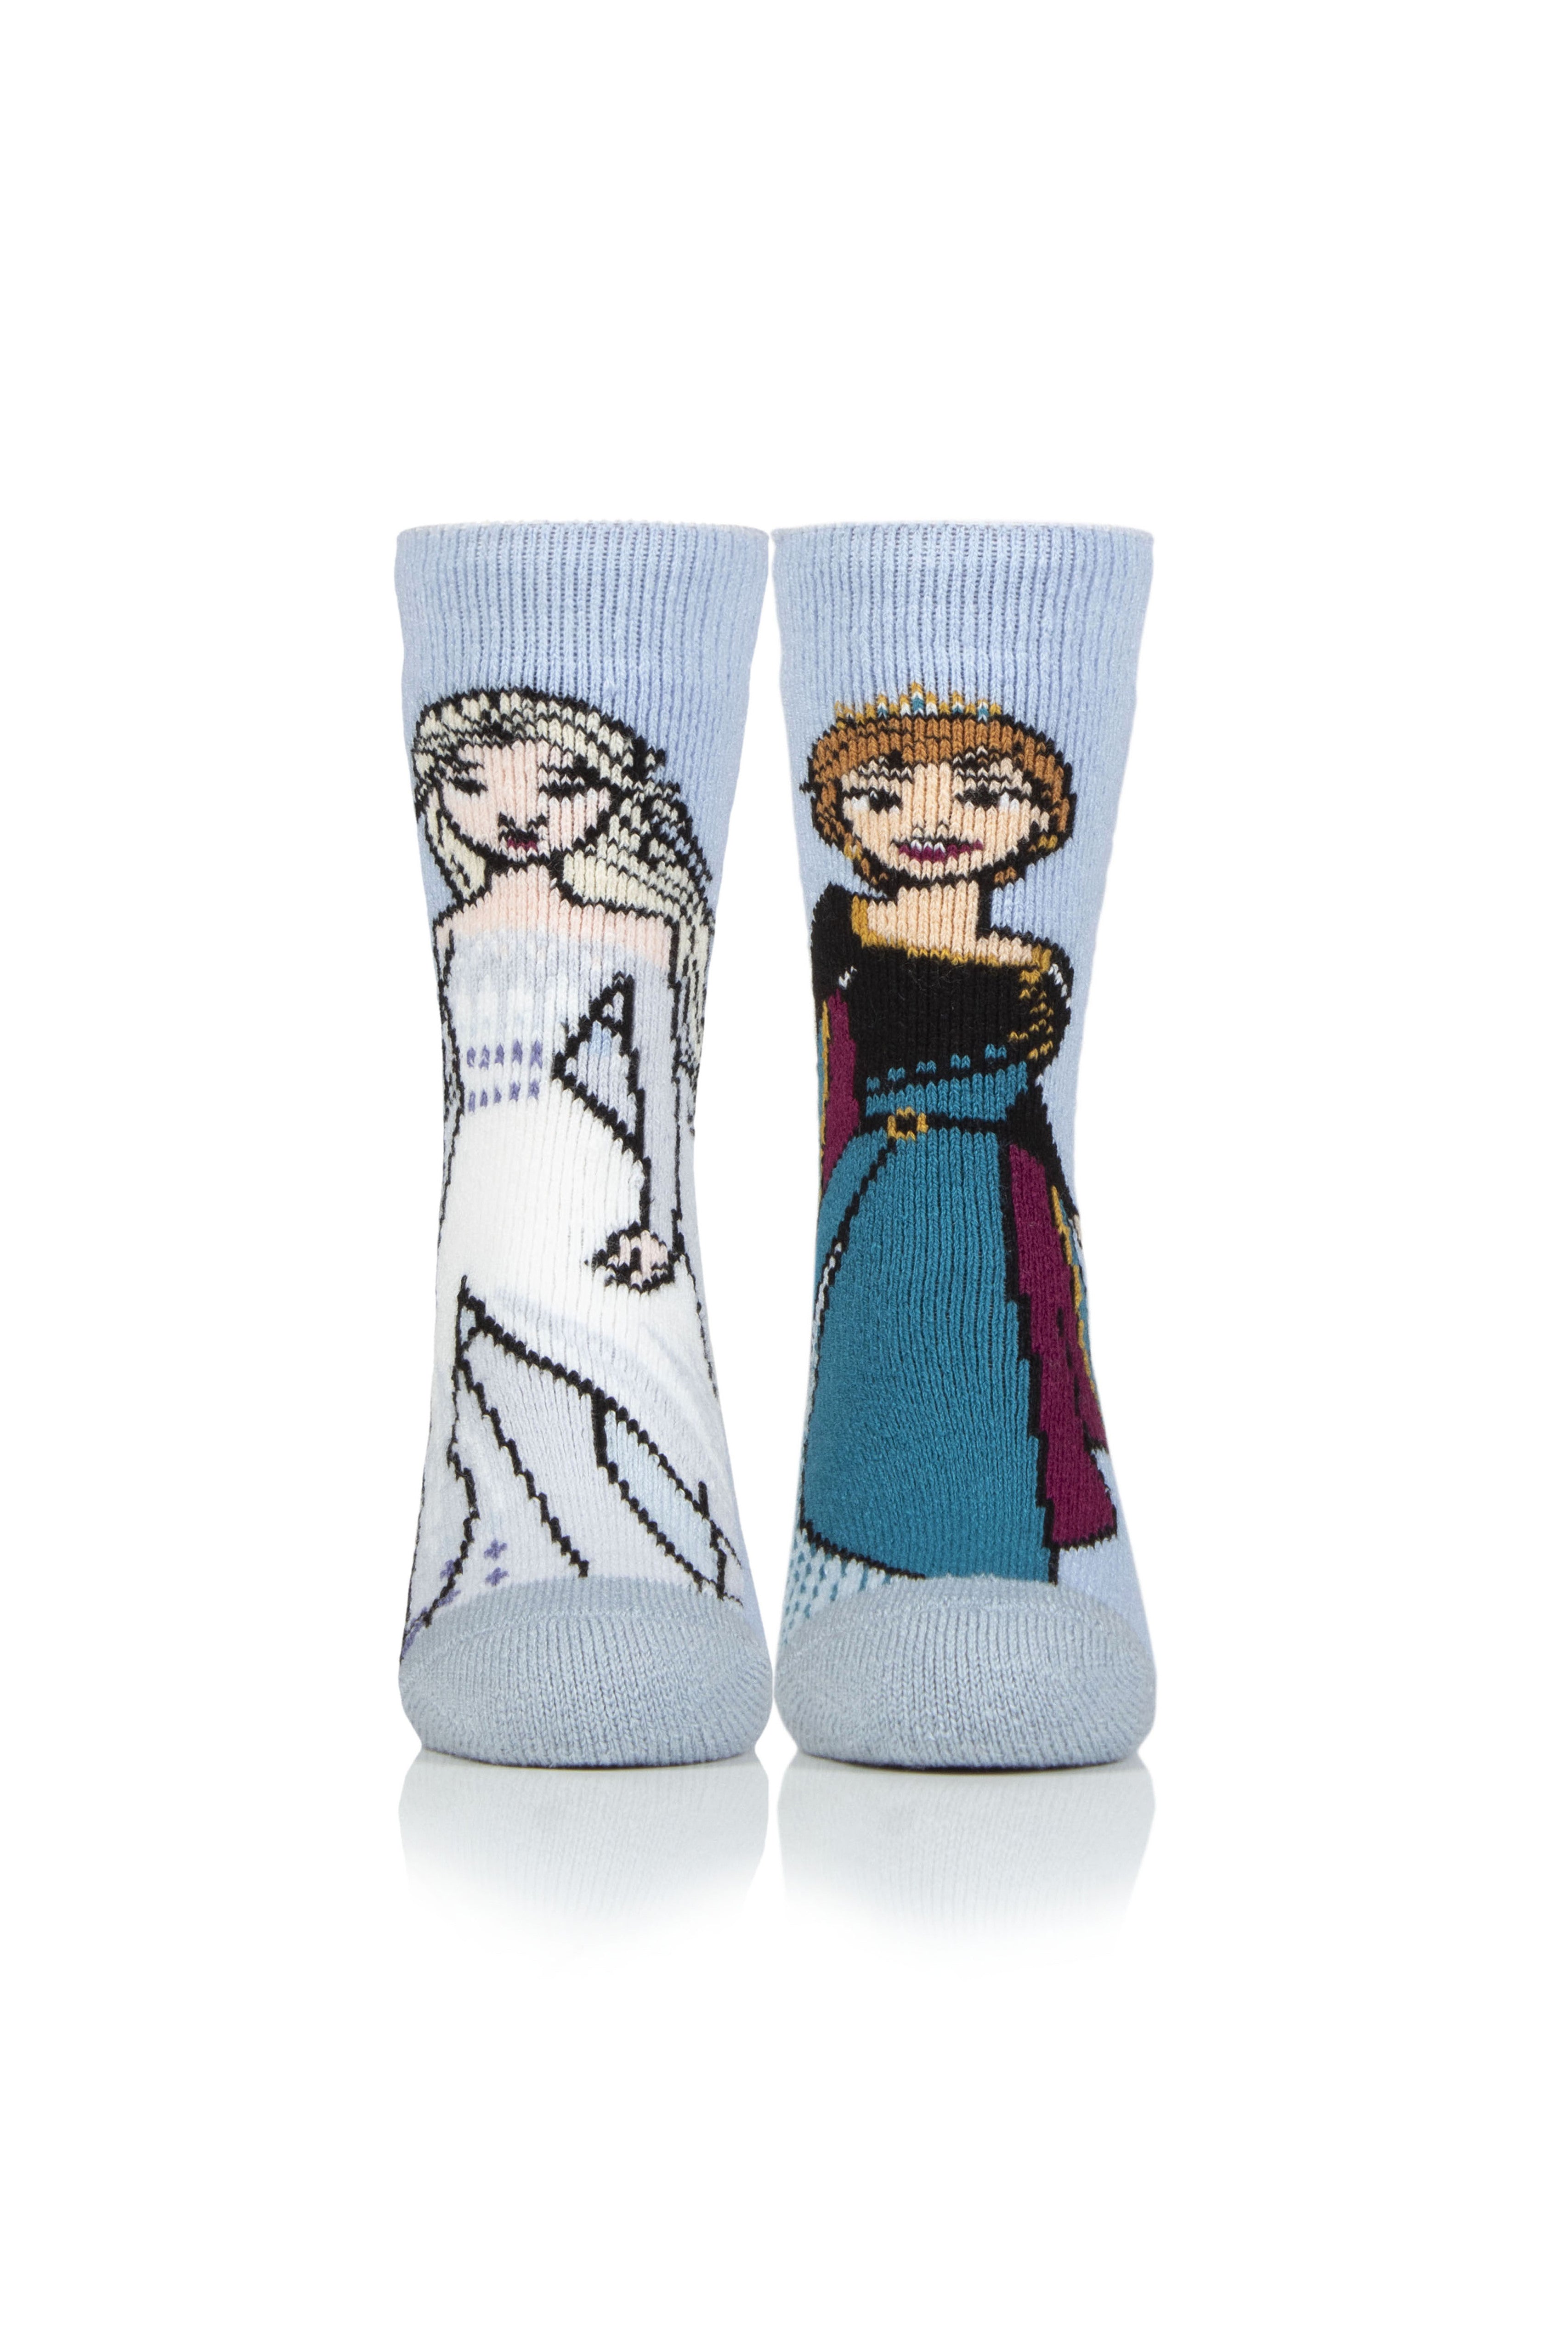 HEAT HOLDERS Lite Licensed Disney Character Socks-Frozen-Kids